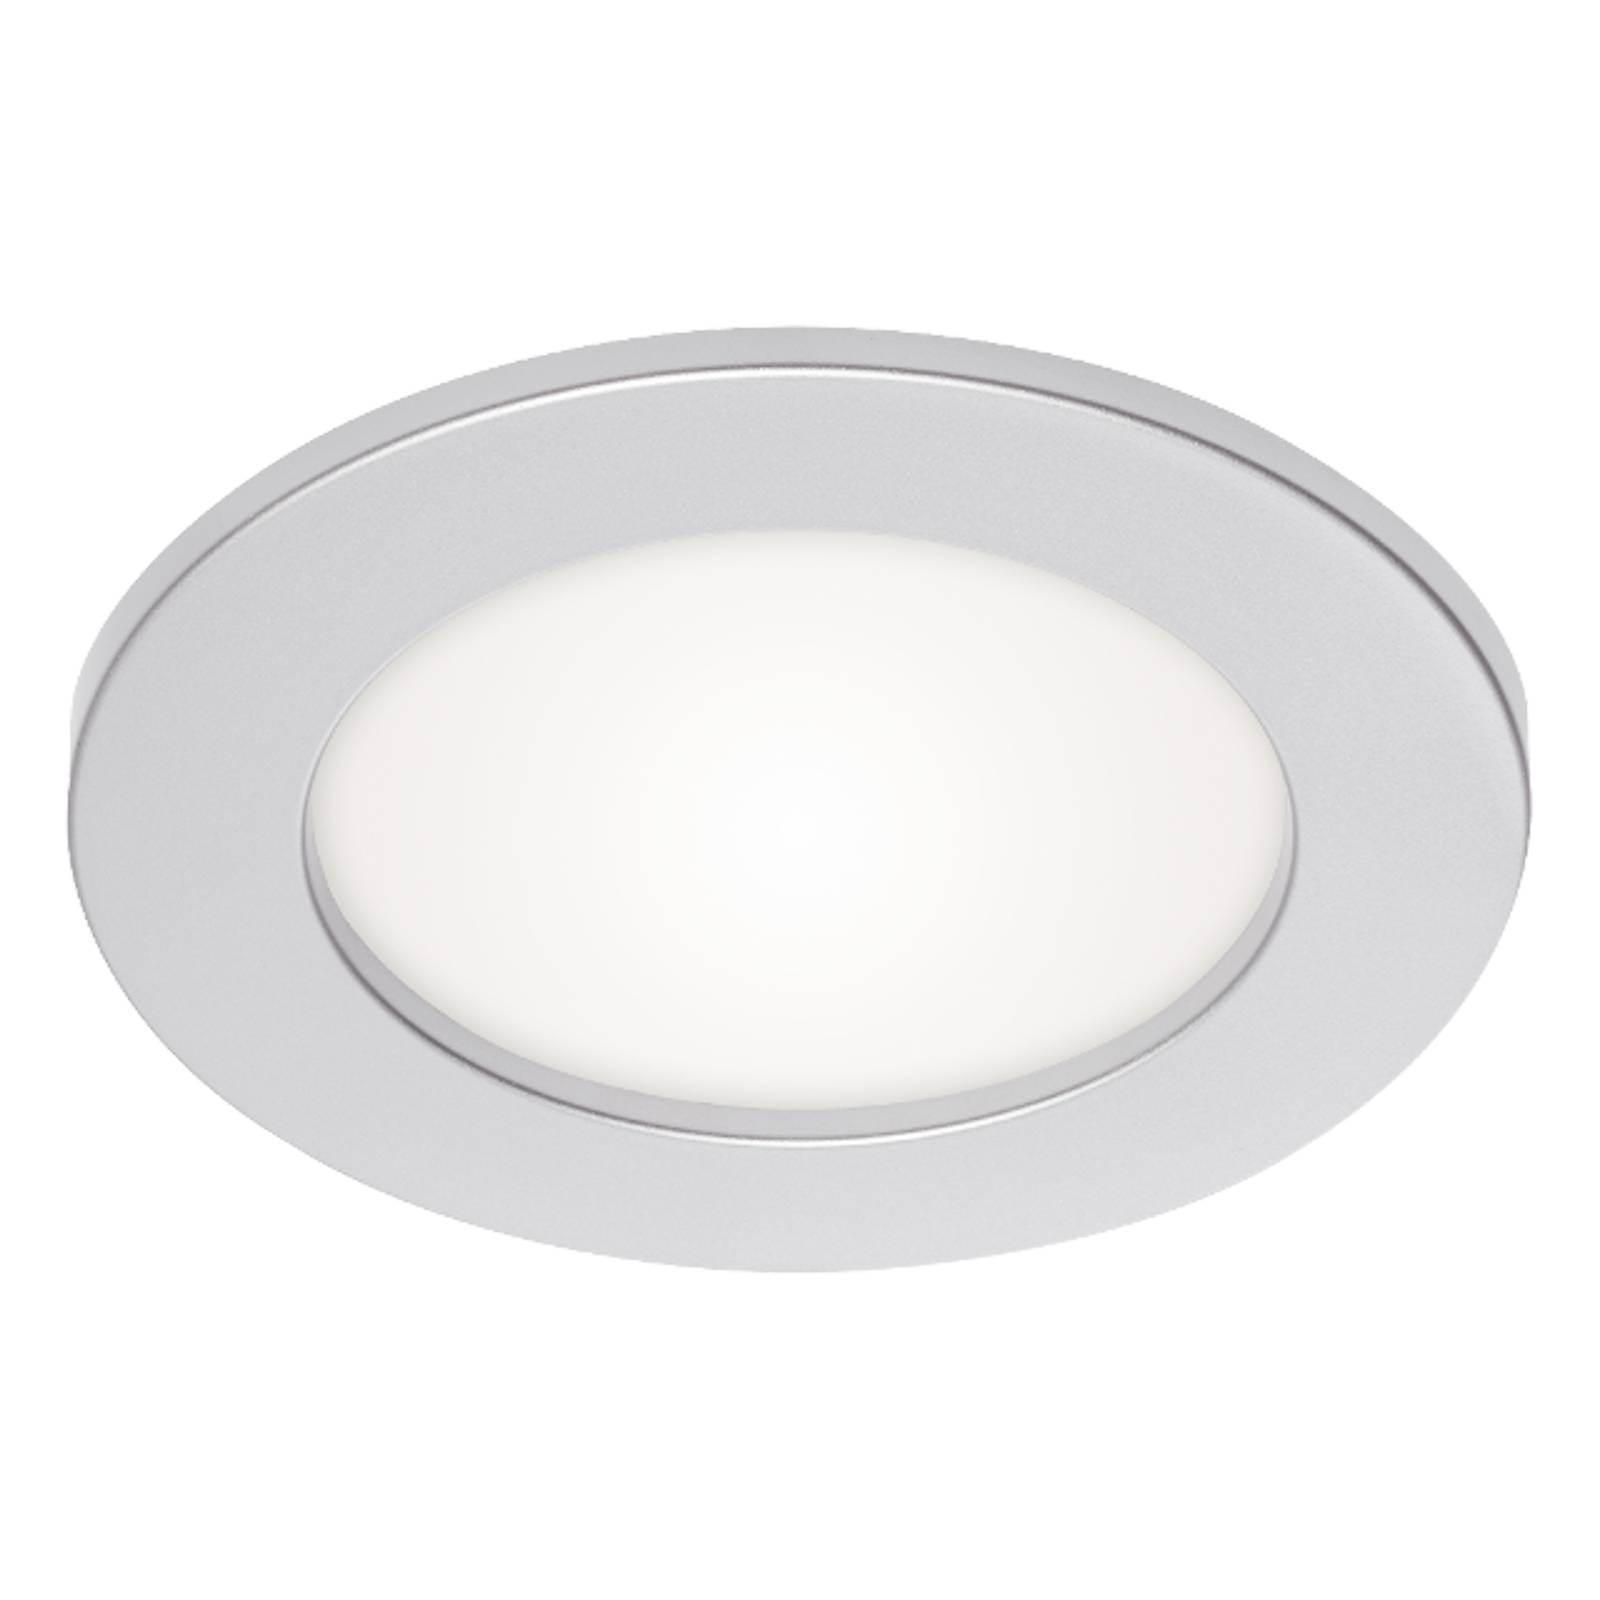 Prios Cadance LED recessed light, silver, 17 cm